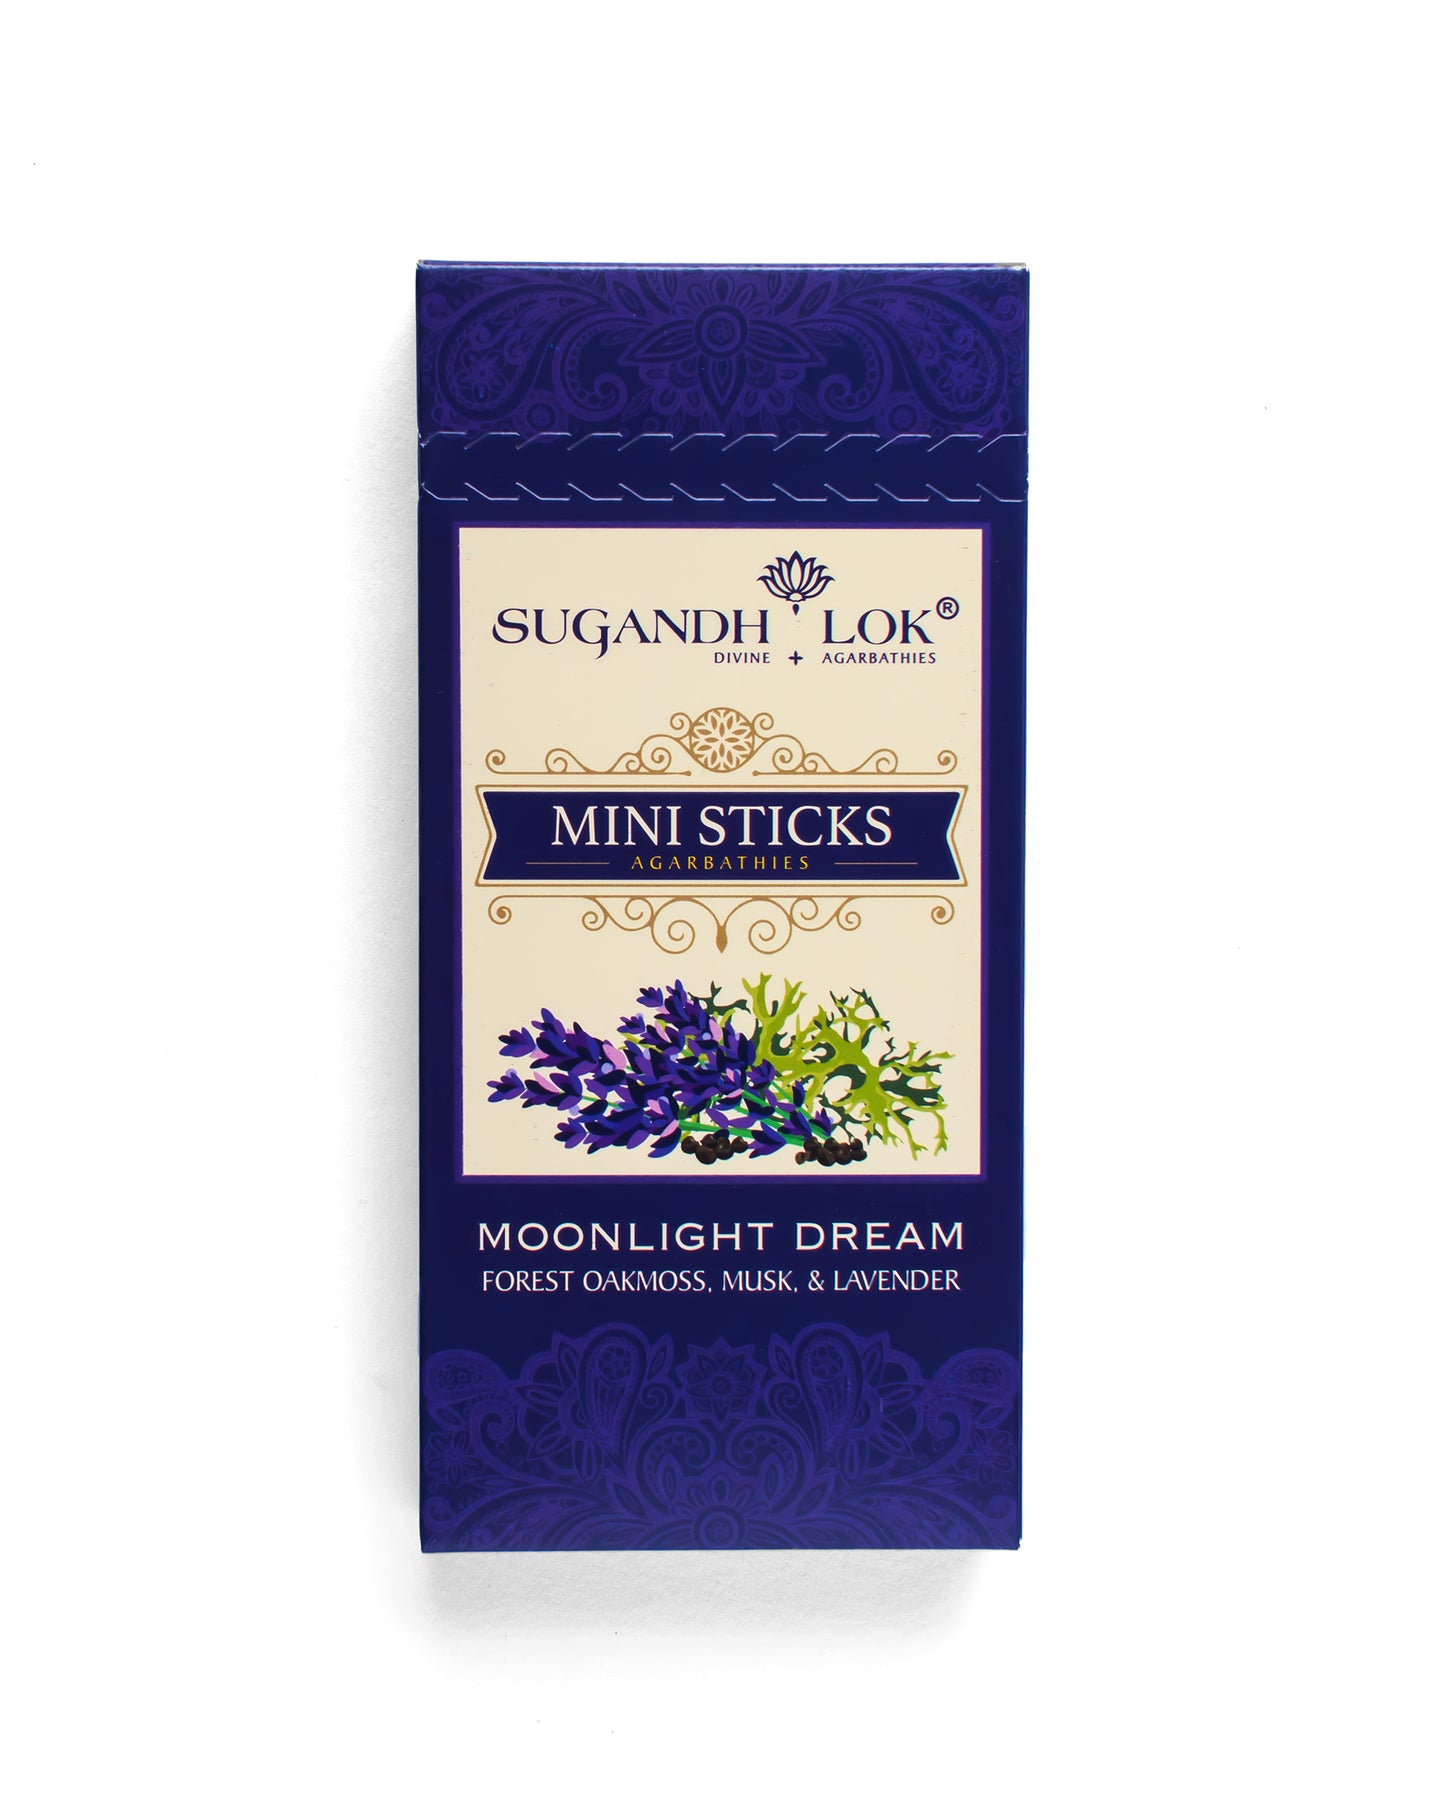 Moonlight Dream Agarbatti Mini Sticks Box by SugandhLok